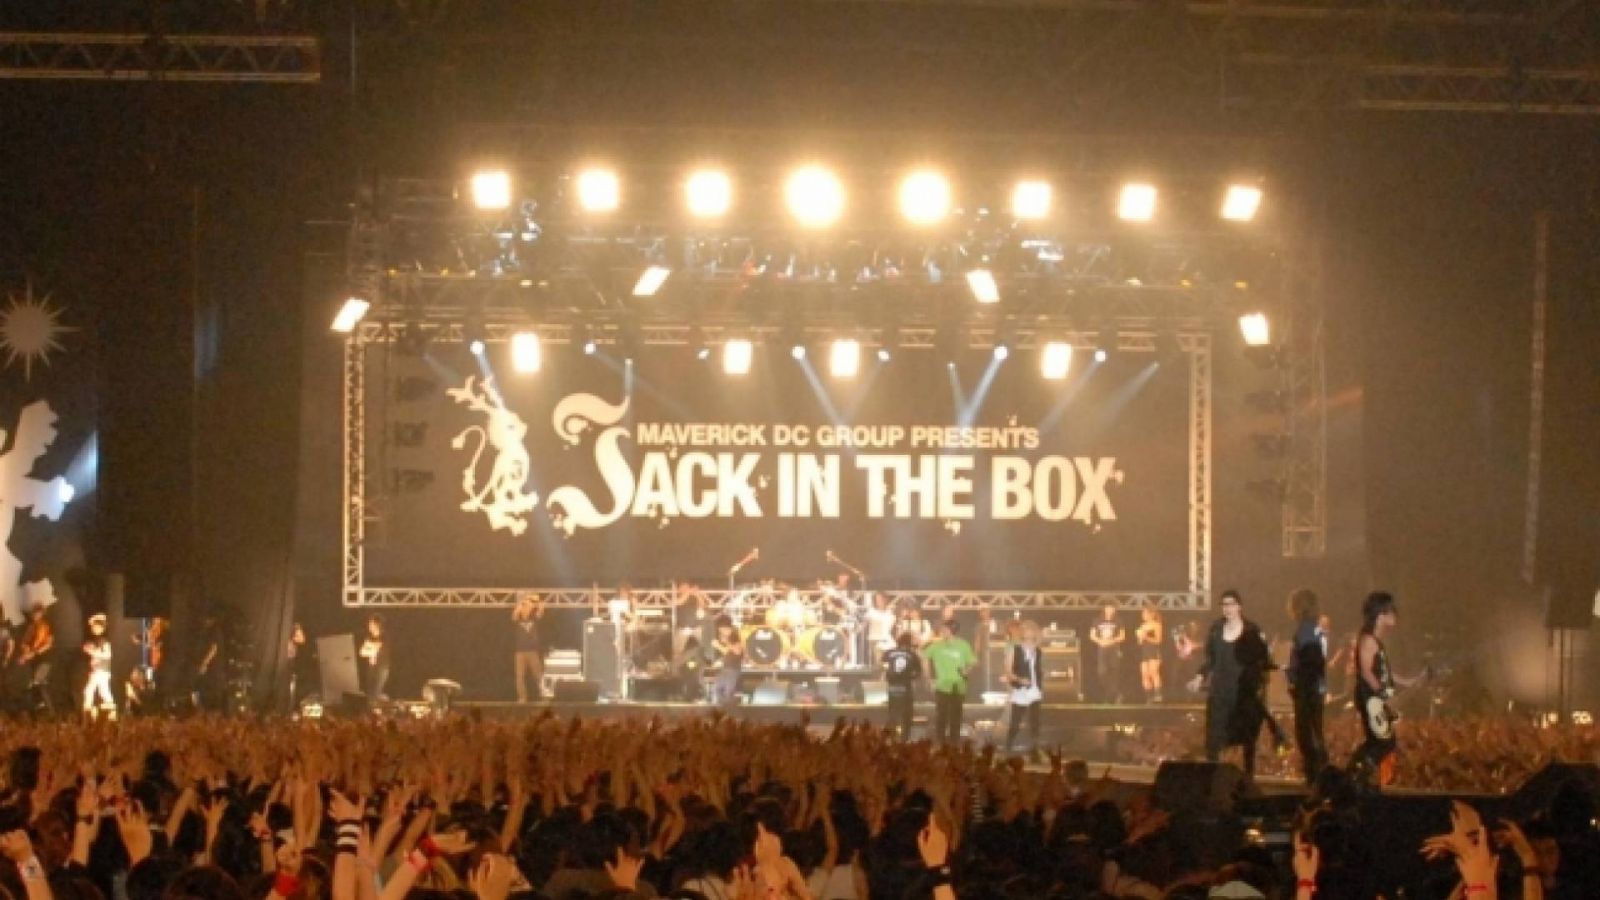 JACK IN THE BOX 2010 será transmitido ao vivo pela internet © Maverick DC Group